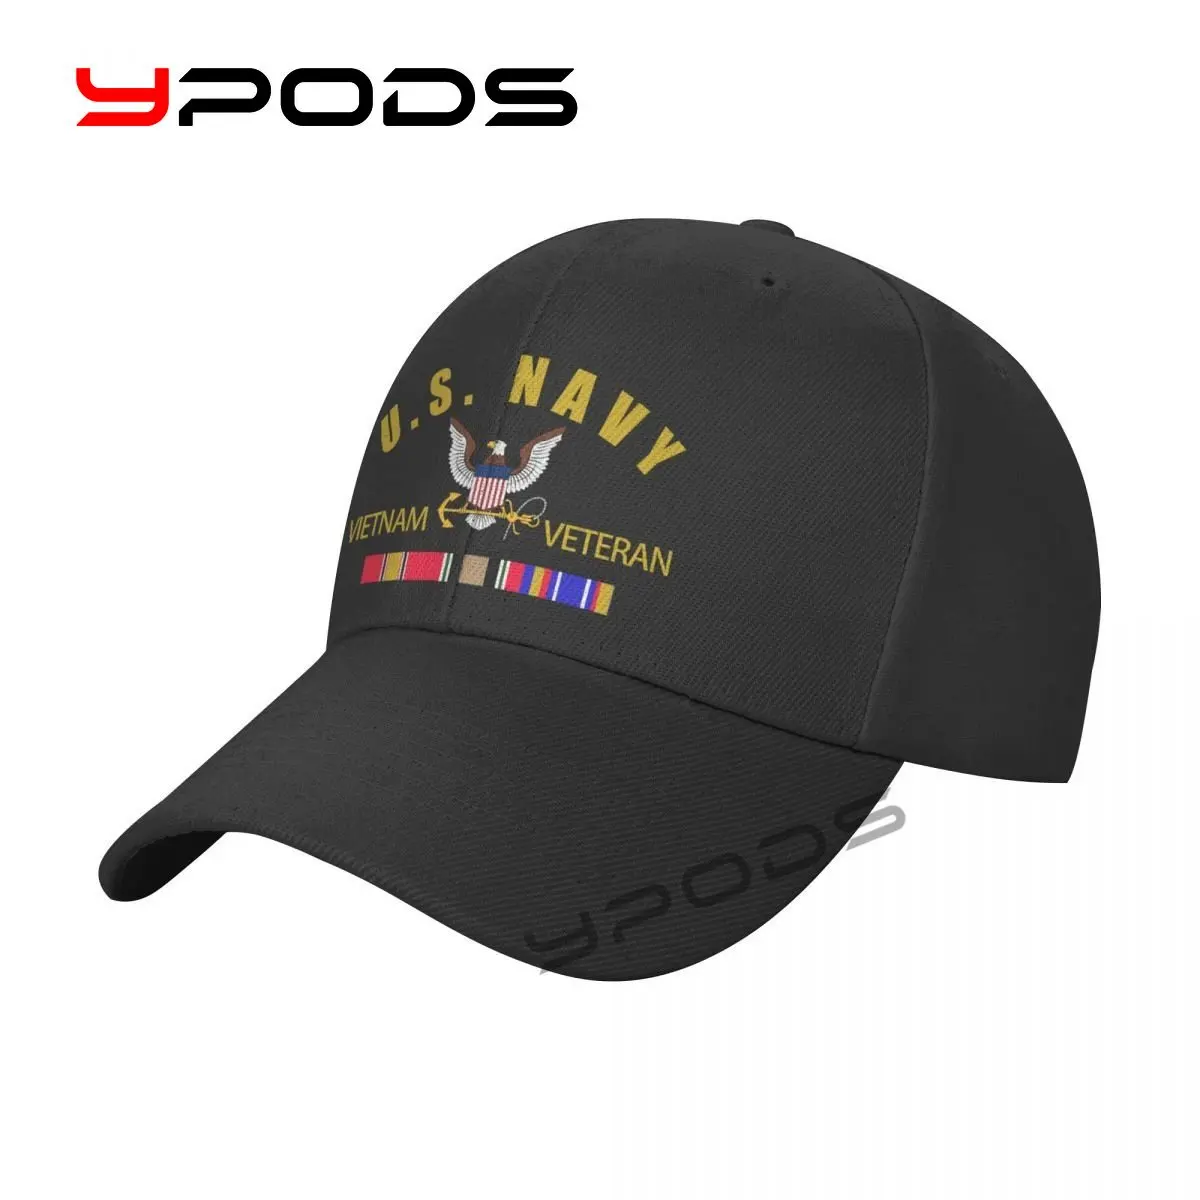 

Men's Baseball Caps United States Army Vietnam Veteran Insignia With Ribbon Black Patch Snapback Cap Adjustable Outdoor Sun Hat